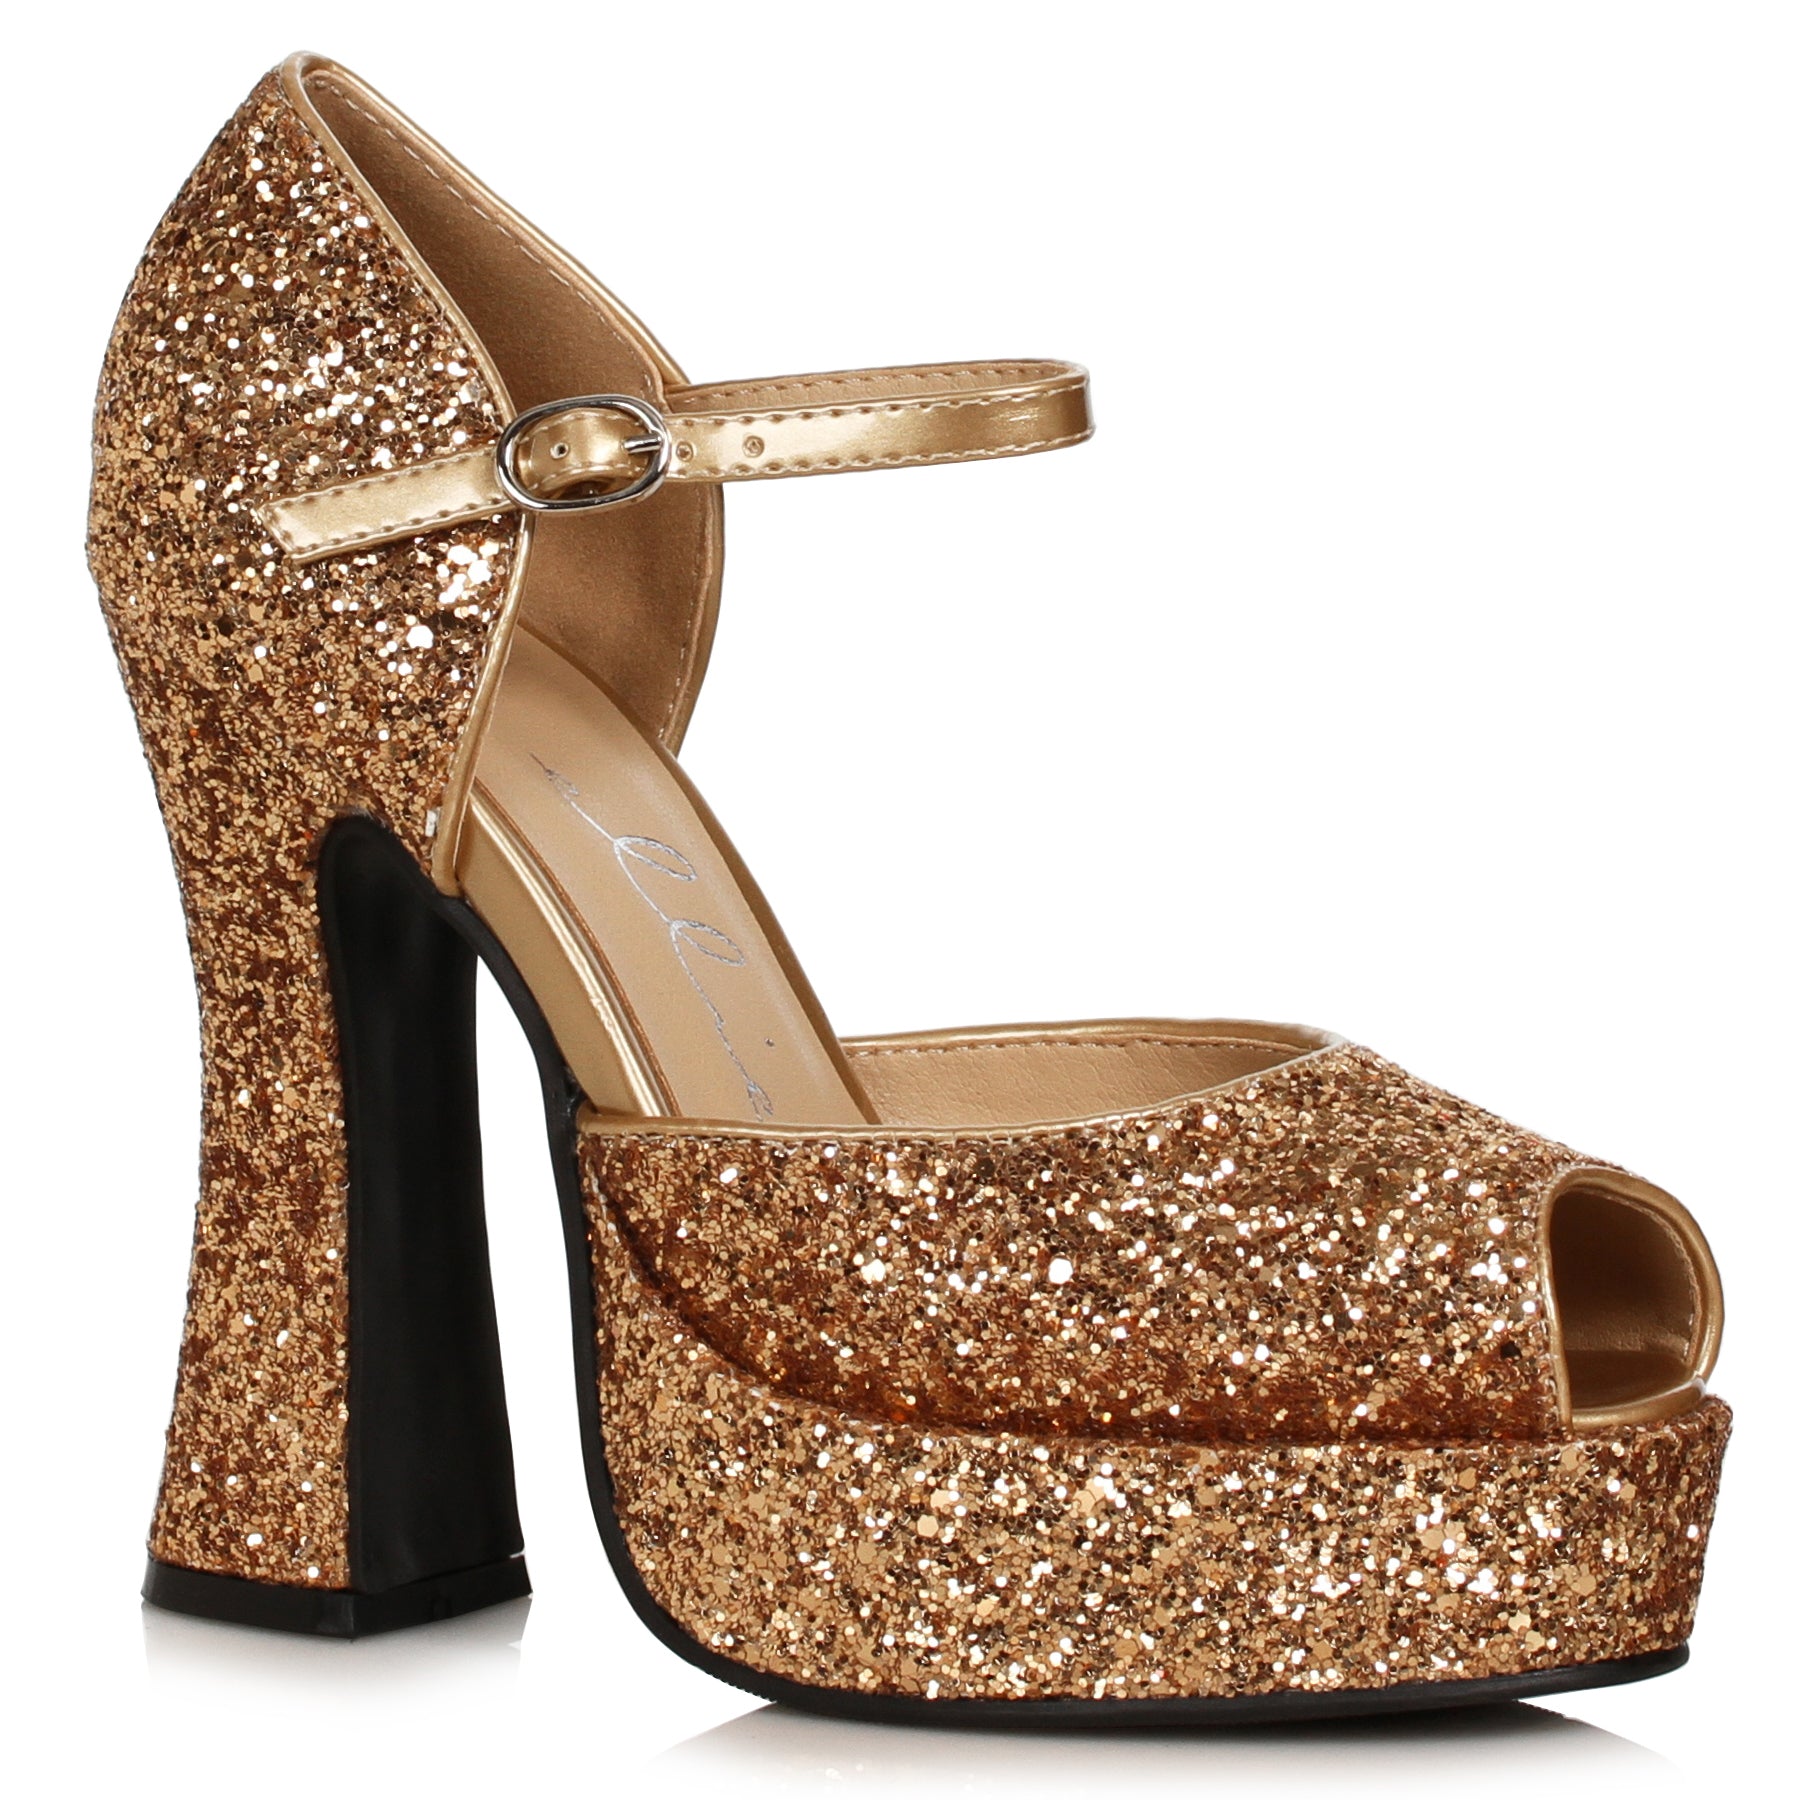 557-SPARKLE Ellie Shoes 5.5"Heel Open Toe Shoe With Ankle Strap FESTIVAL 5 INCH HEEL